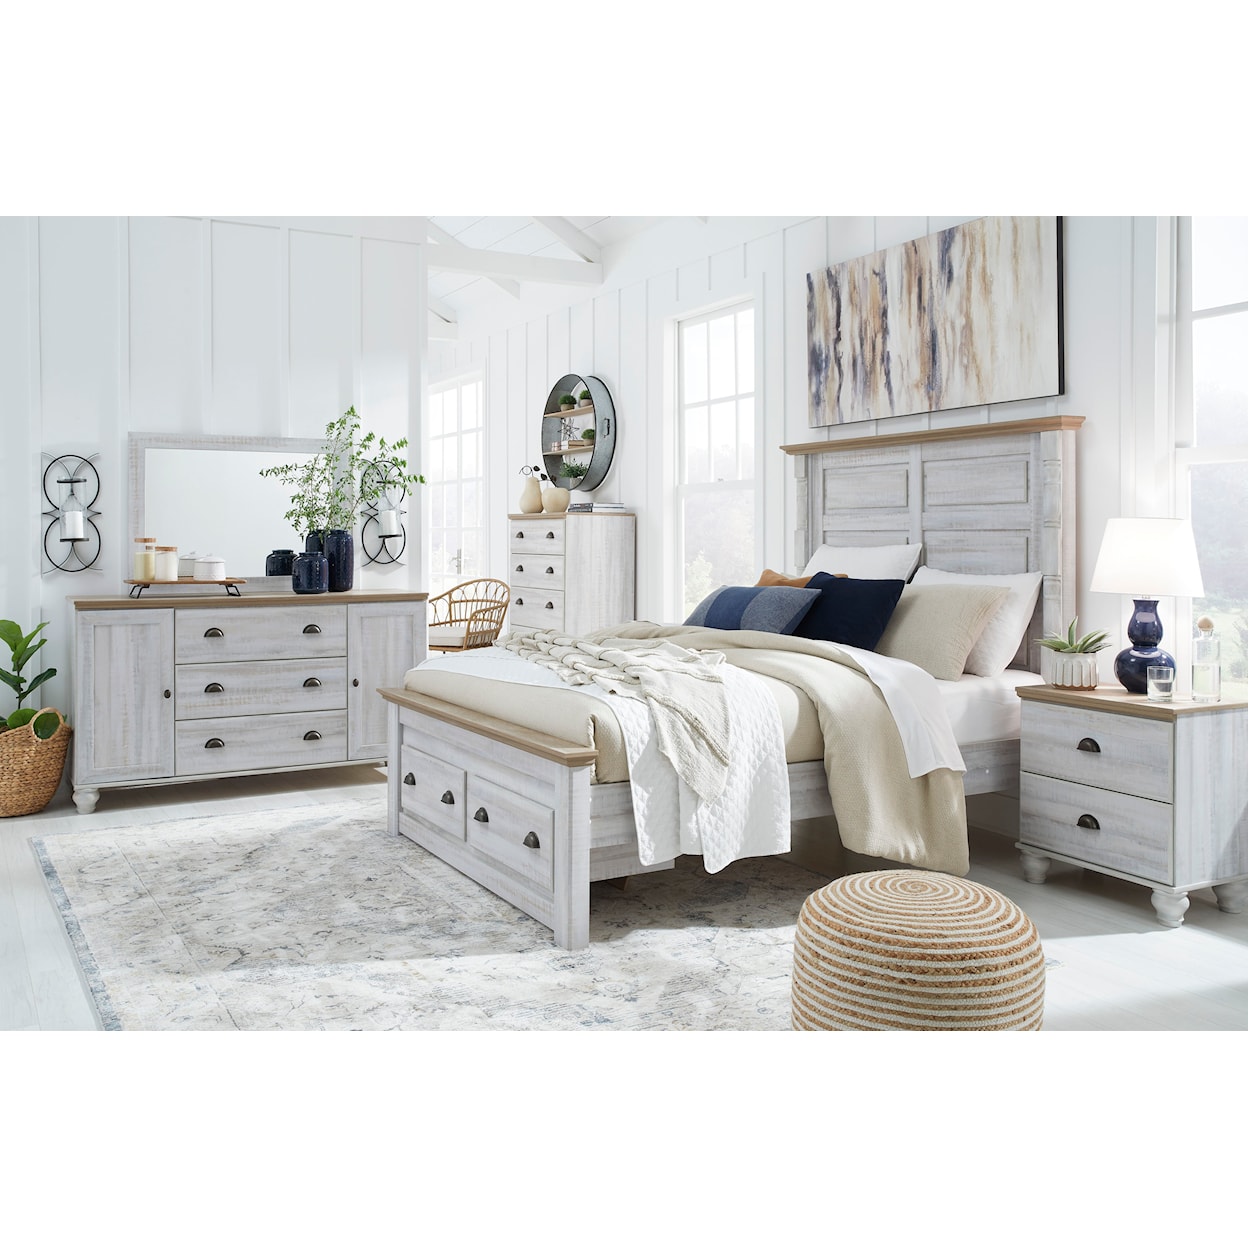 Ashley Furniture Signature Design Haven Bay Queen Bedroom Set